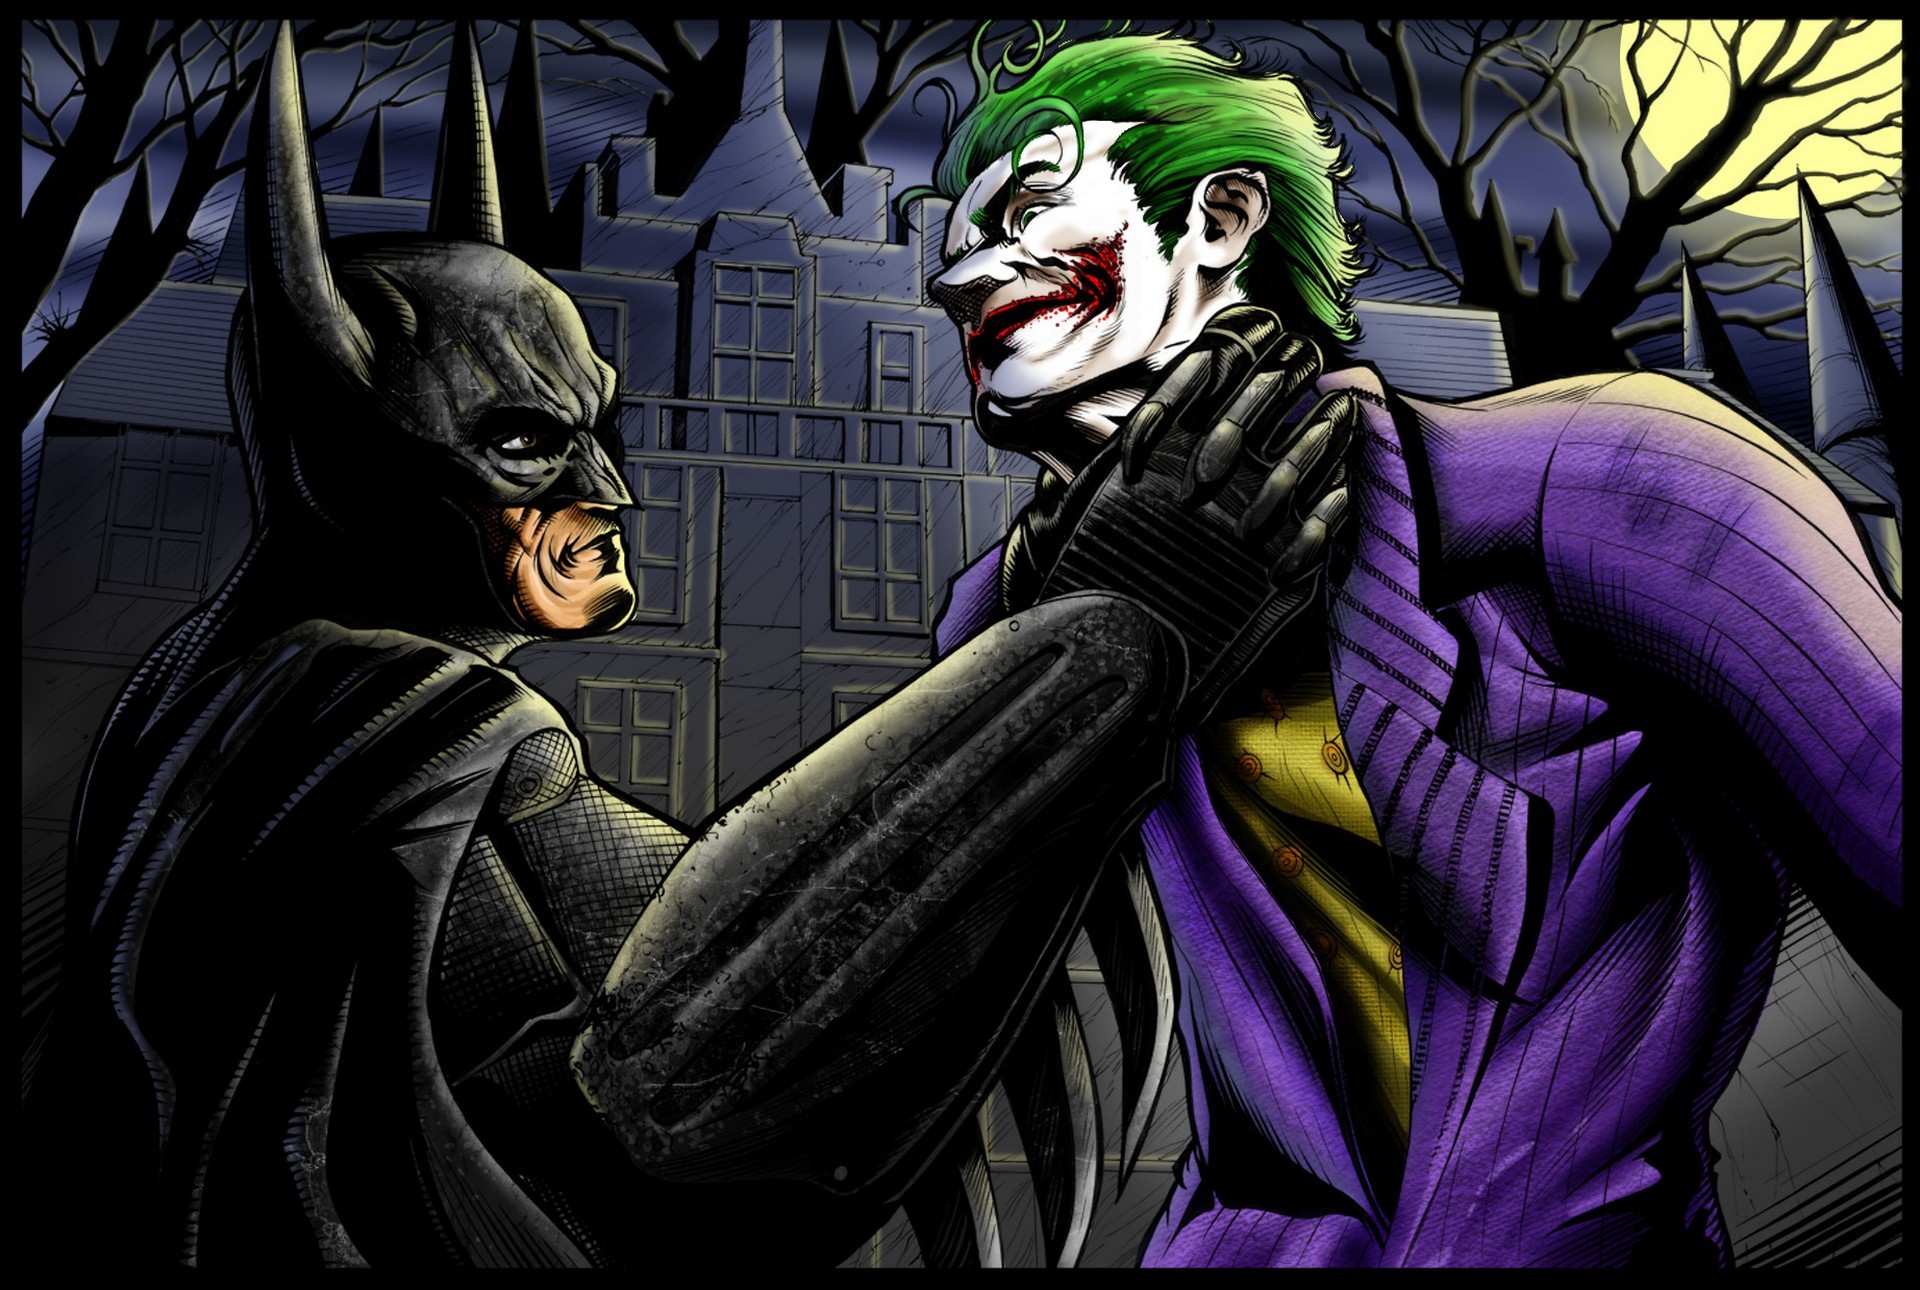 382701 Bild herunterladen comics, the batman, batman: arkham asylum, joker - Hintergrundbilder und Bildschirmschoner kostenlos